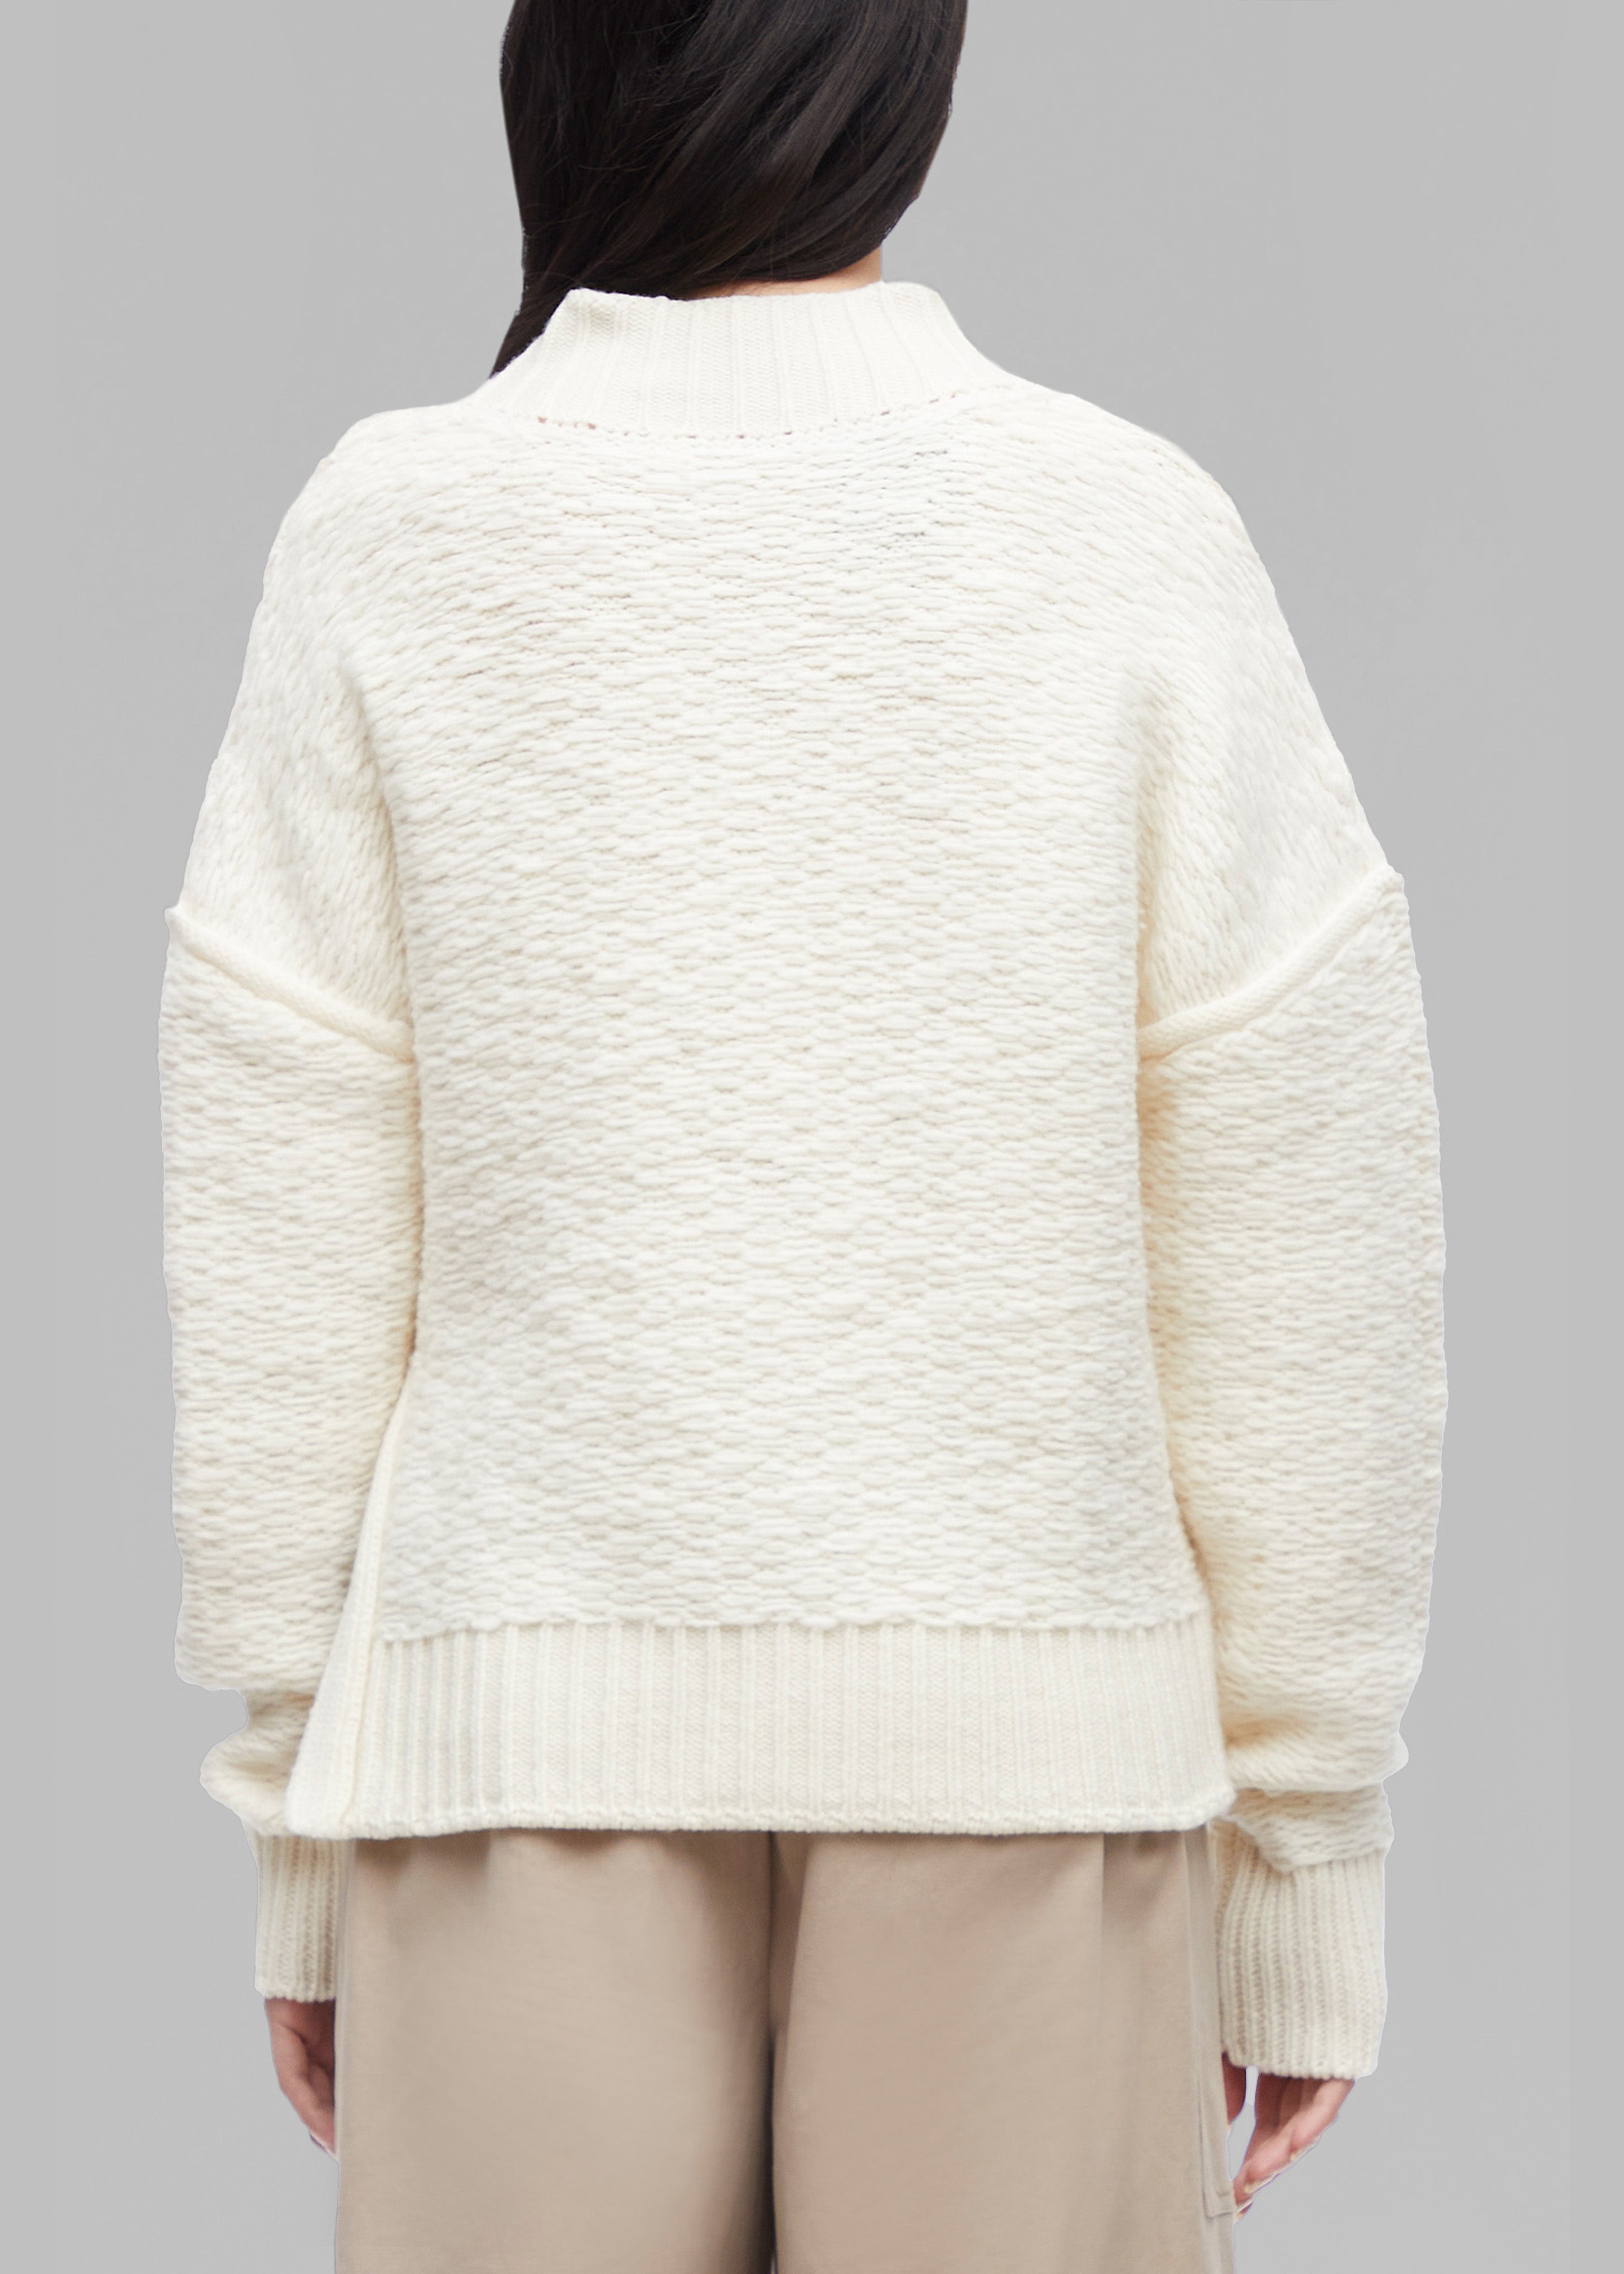 3.1 Phillip Lim Wool Jacquard Turtleneck Sweater - Ivory - 4